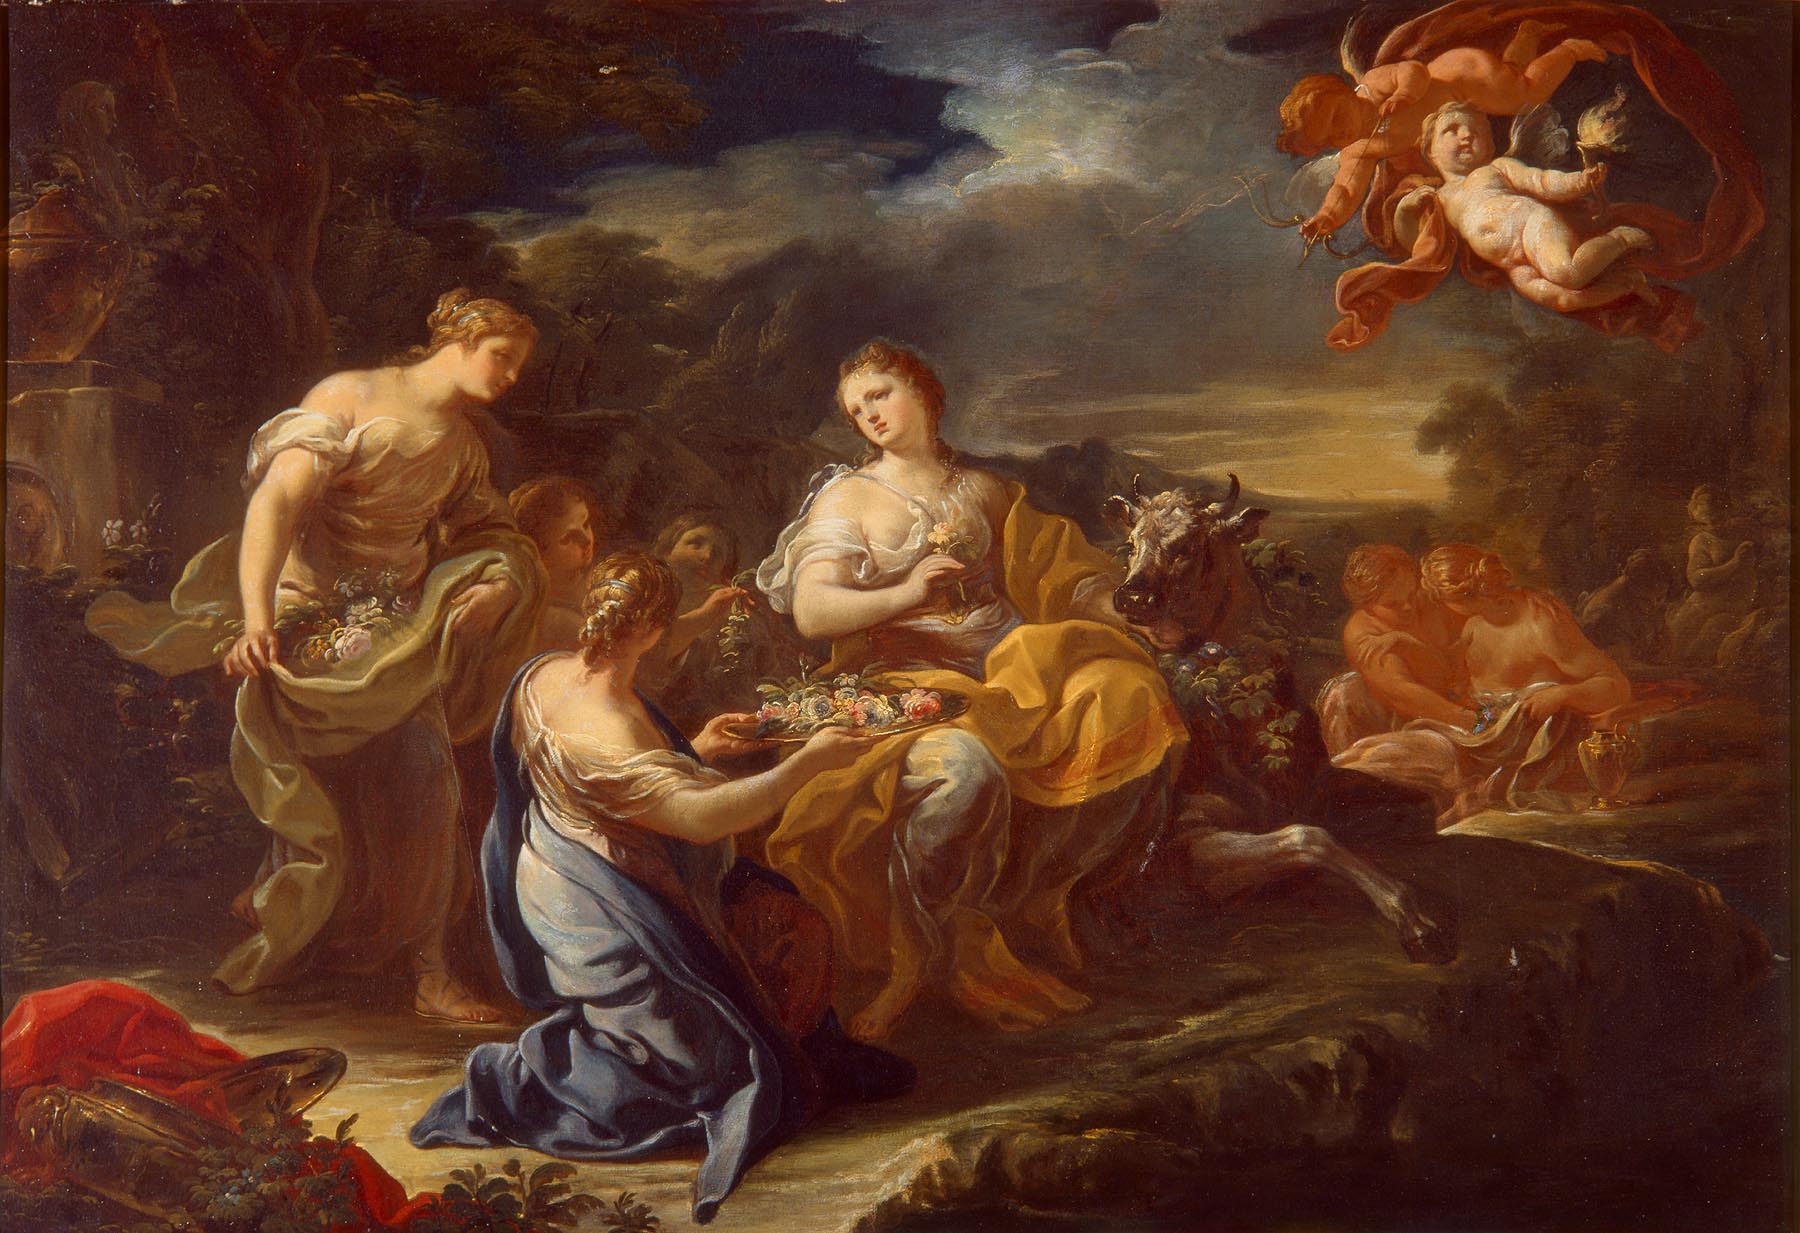 Corrado Giaquinto (Italian, 1703–1766) The Rape of Europa, ca. 1752 Oil on canvas 33 1/2 x 48 1/2 in. (85.09 x 123.19 cm) Gift of Mr. and Mrs. Myron Laskin M1970.68.1 Photo credit P. Richard Eells